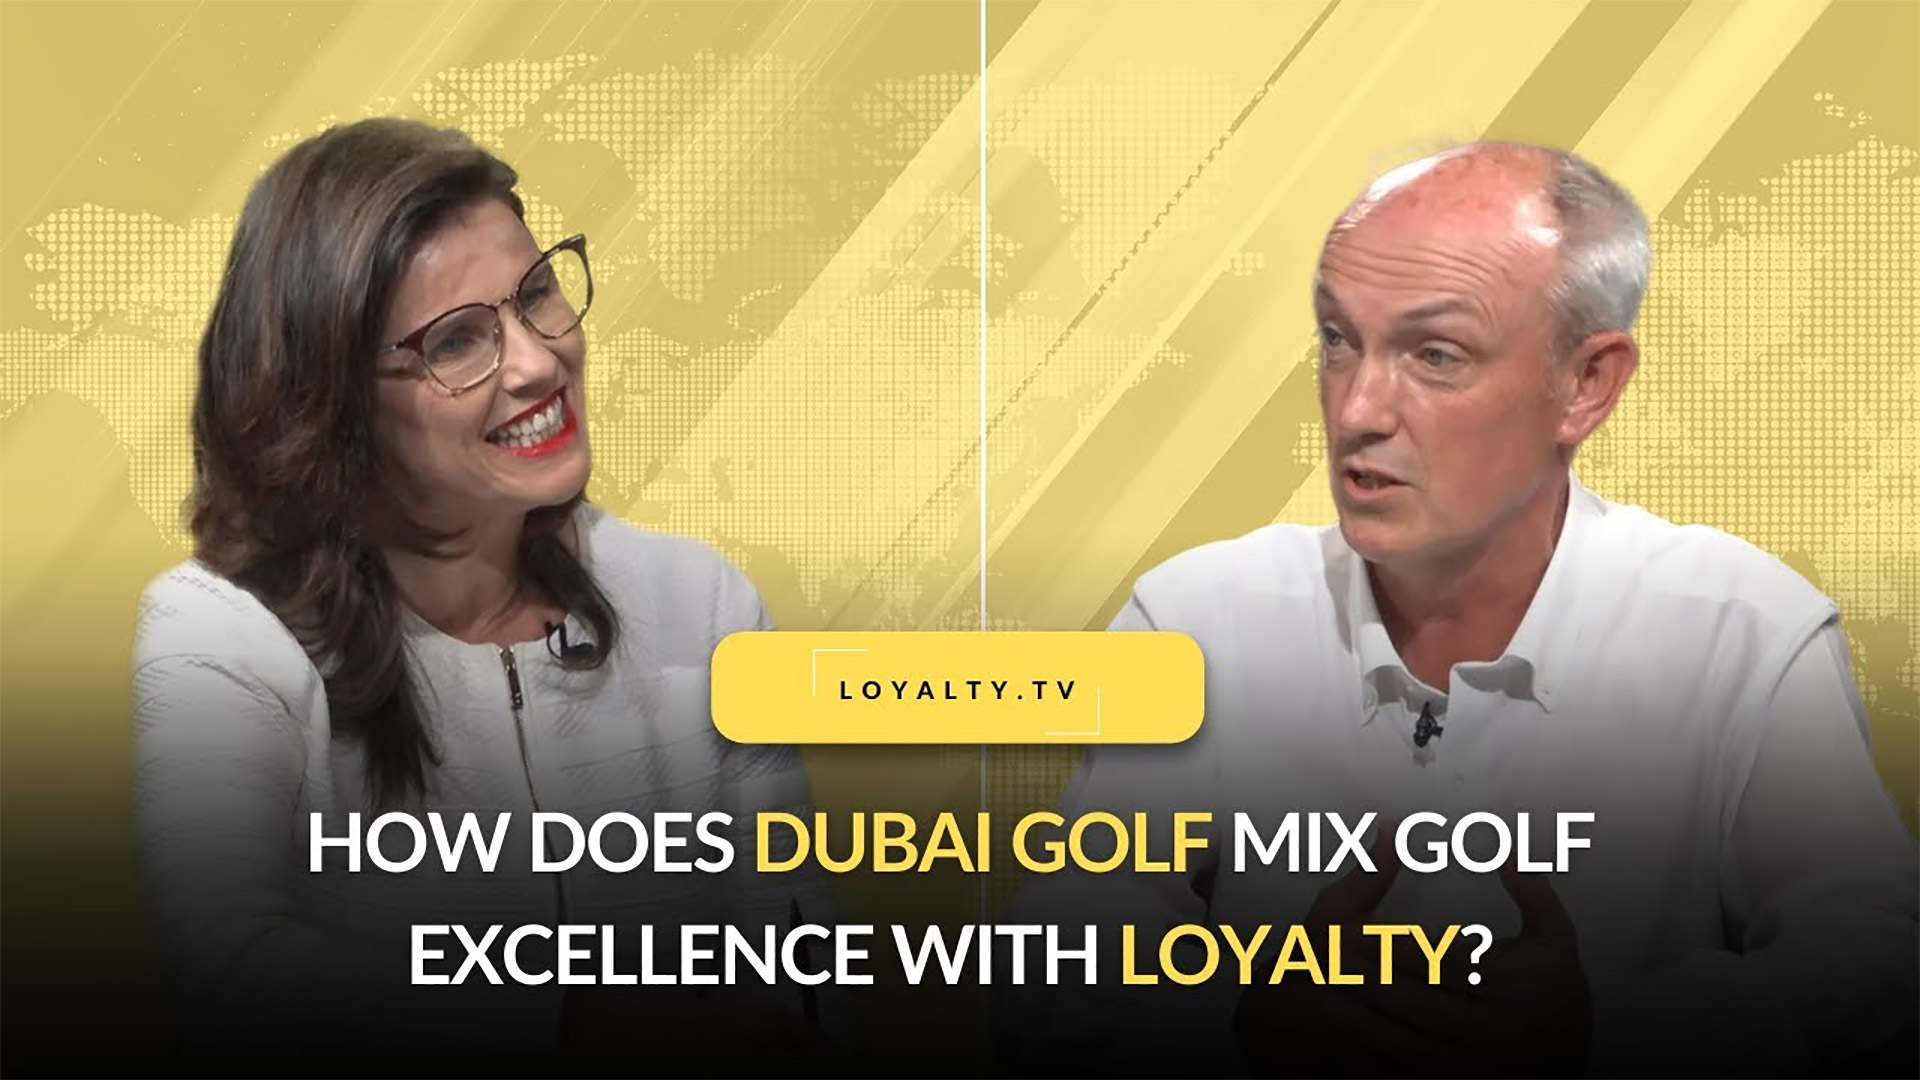 Dubai Golf Shares * Viya* – A Lifestyle Platform Driving Loyalty for Golf, Dining & Entertainment